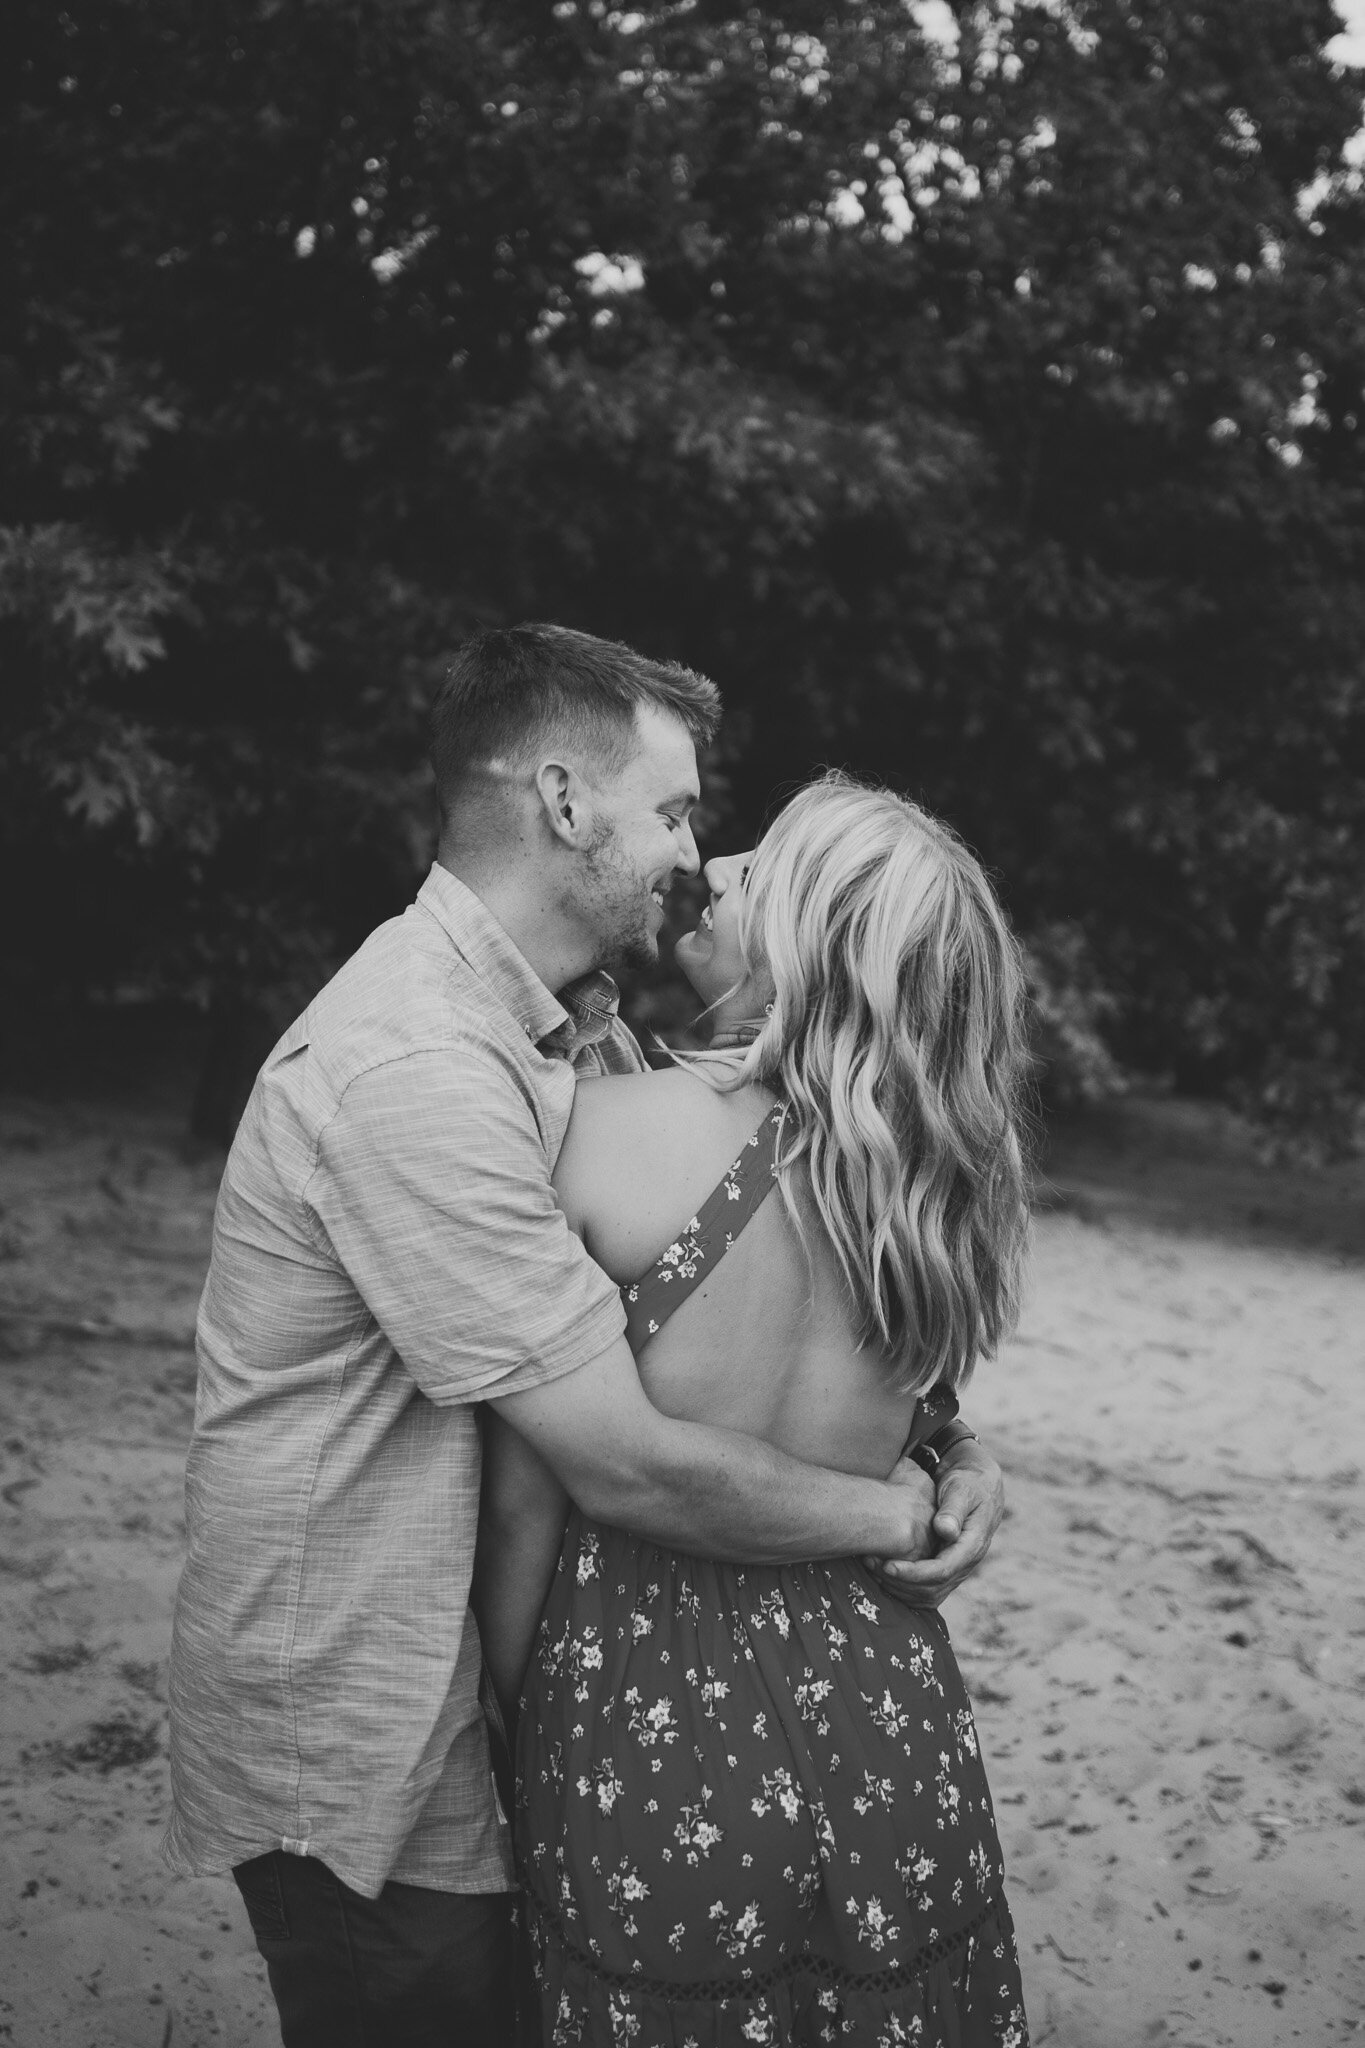 Chris and Kaleen Summer 2020 - Provin Trails - Grand Rapids Wedding Photographer - West Michigan Wedding Photographer - J Darling Photo 016.jpg